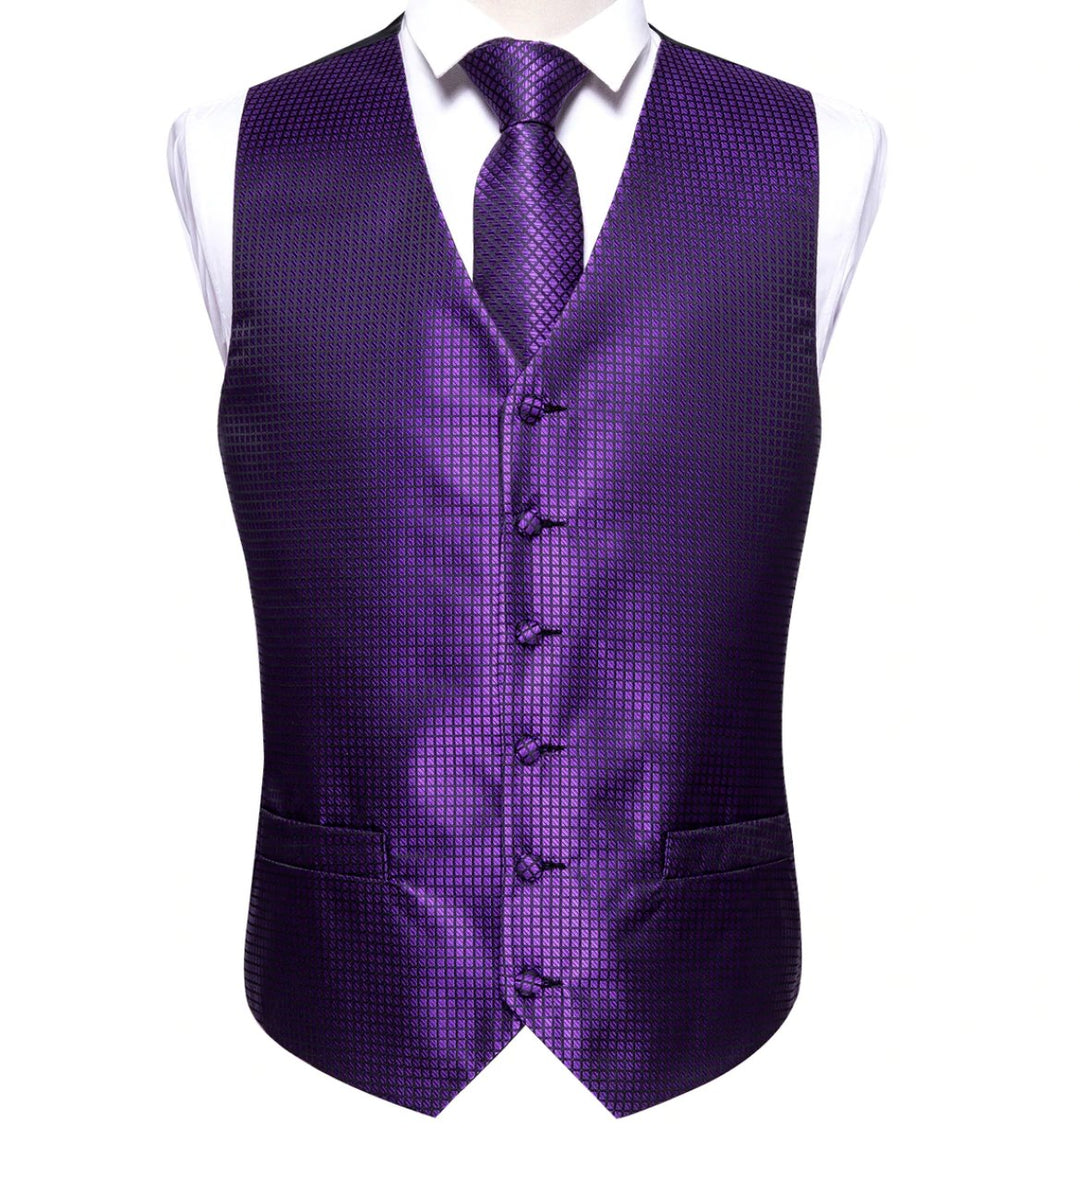 Men's Purple Plaid Silk Vest Necktie Pocket square Cufflinks.MJ - 2026 - SimonVon Shop